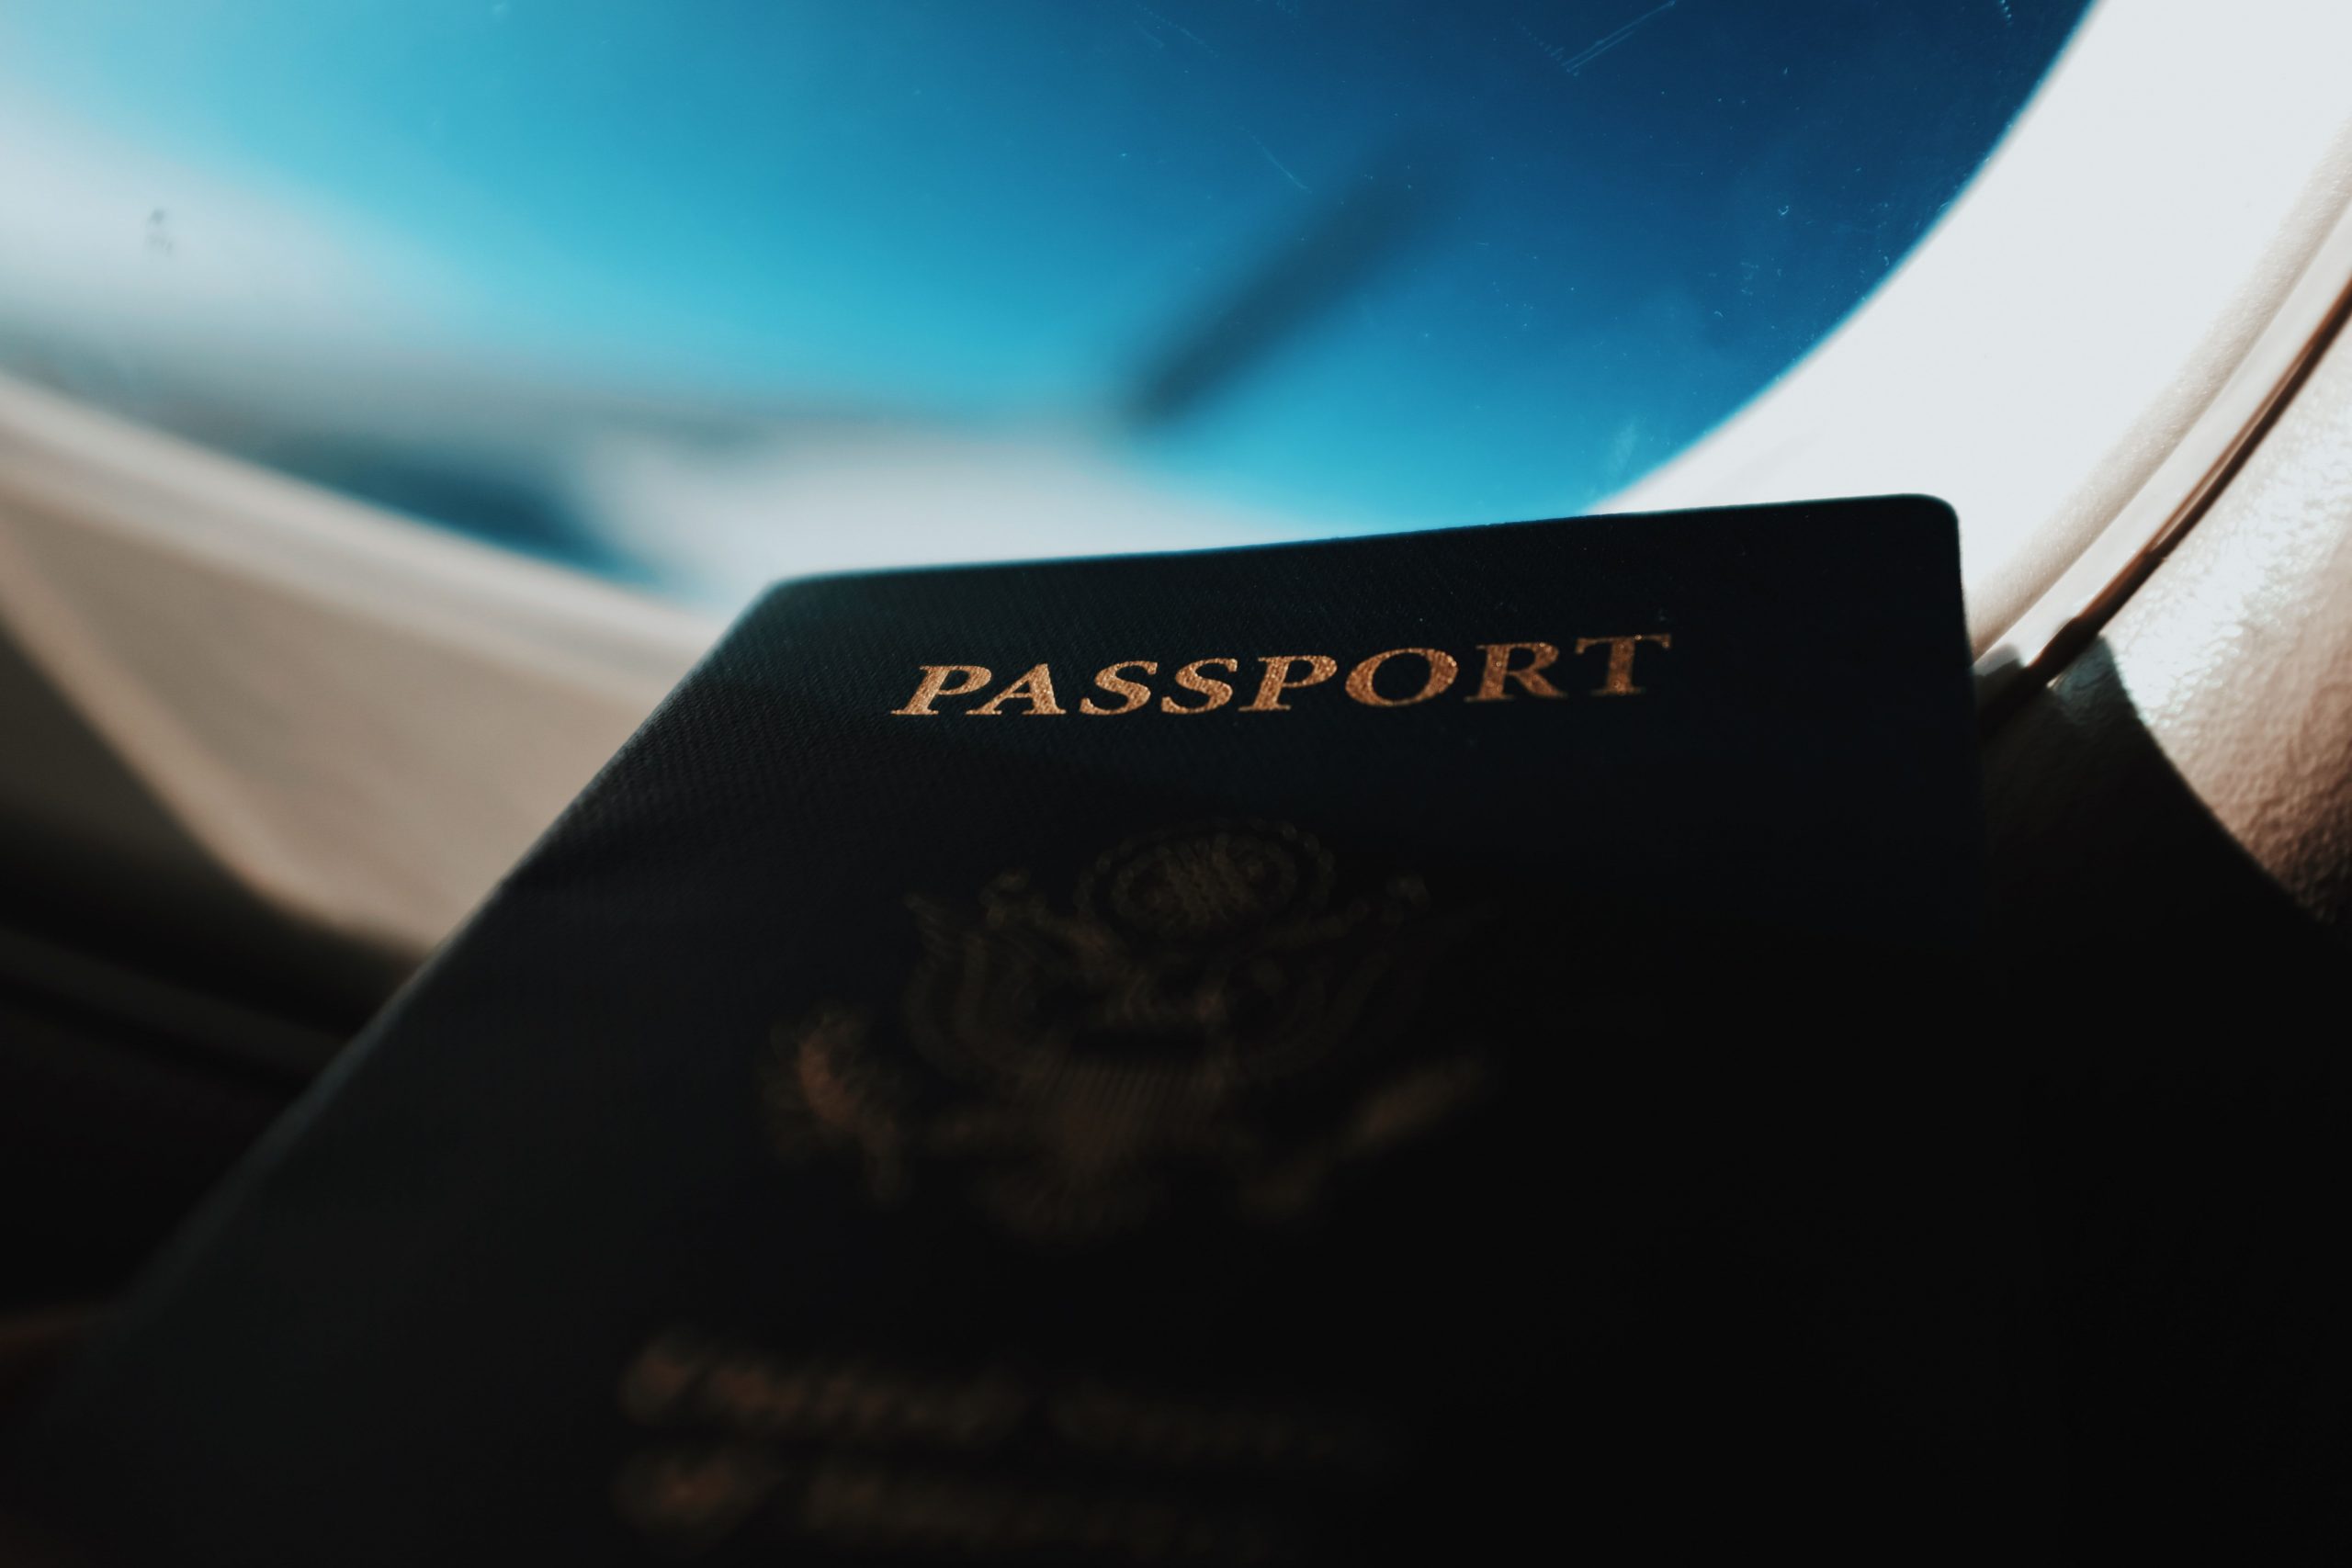 Man receives original passport on ordering cover